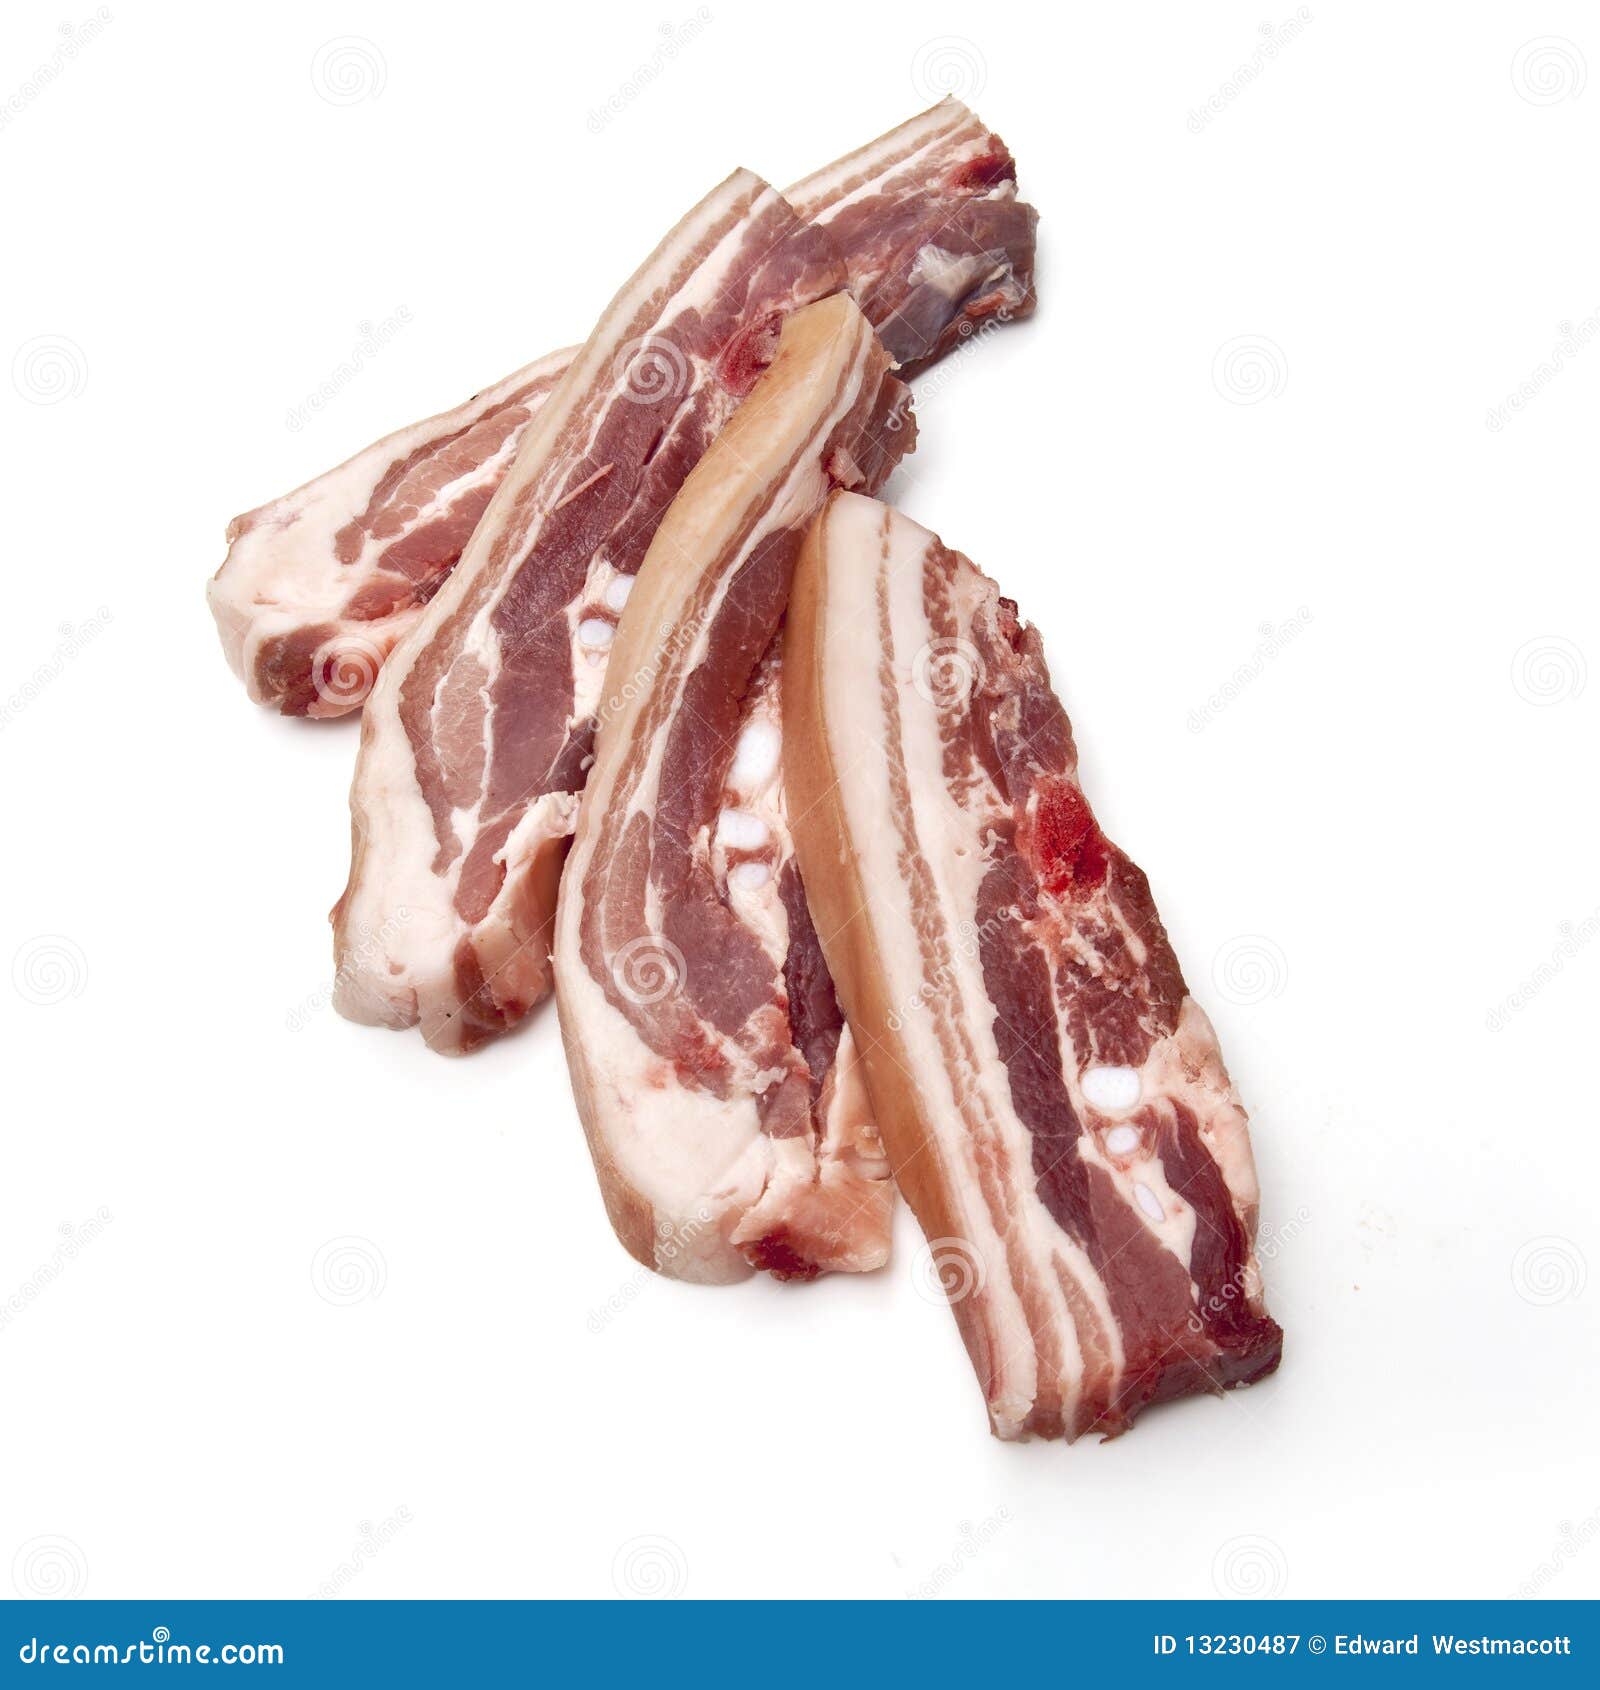 belly pork meat